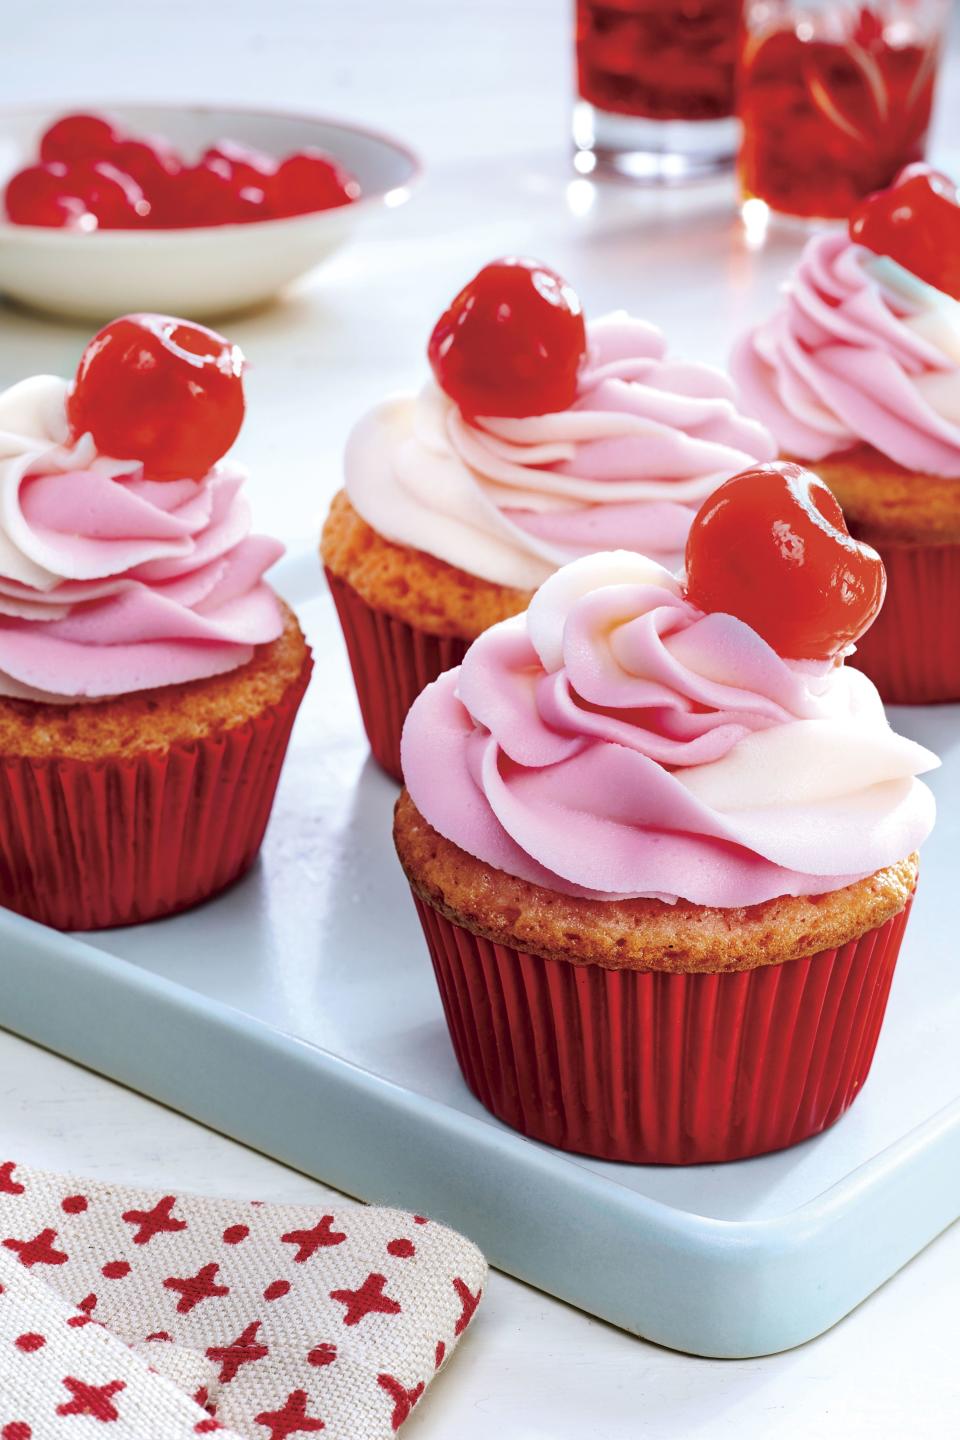 Cheerwine Cherry Cupcakes with Cherry-Swirl Frosting